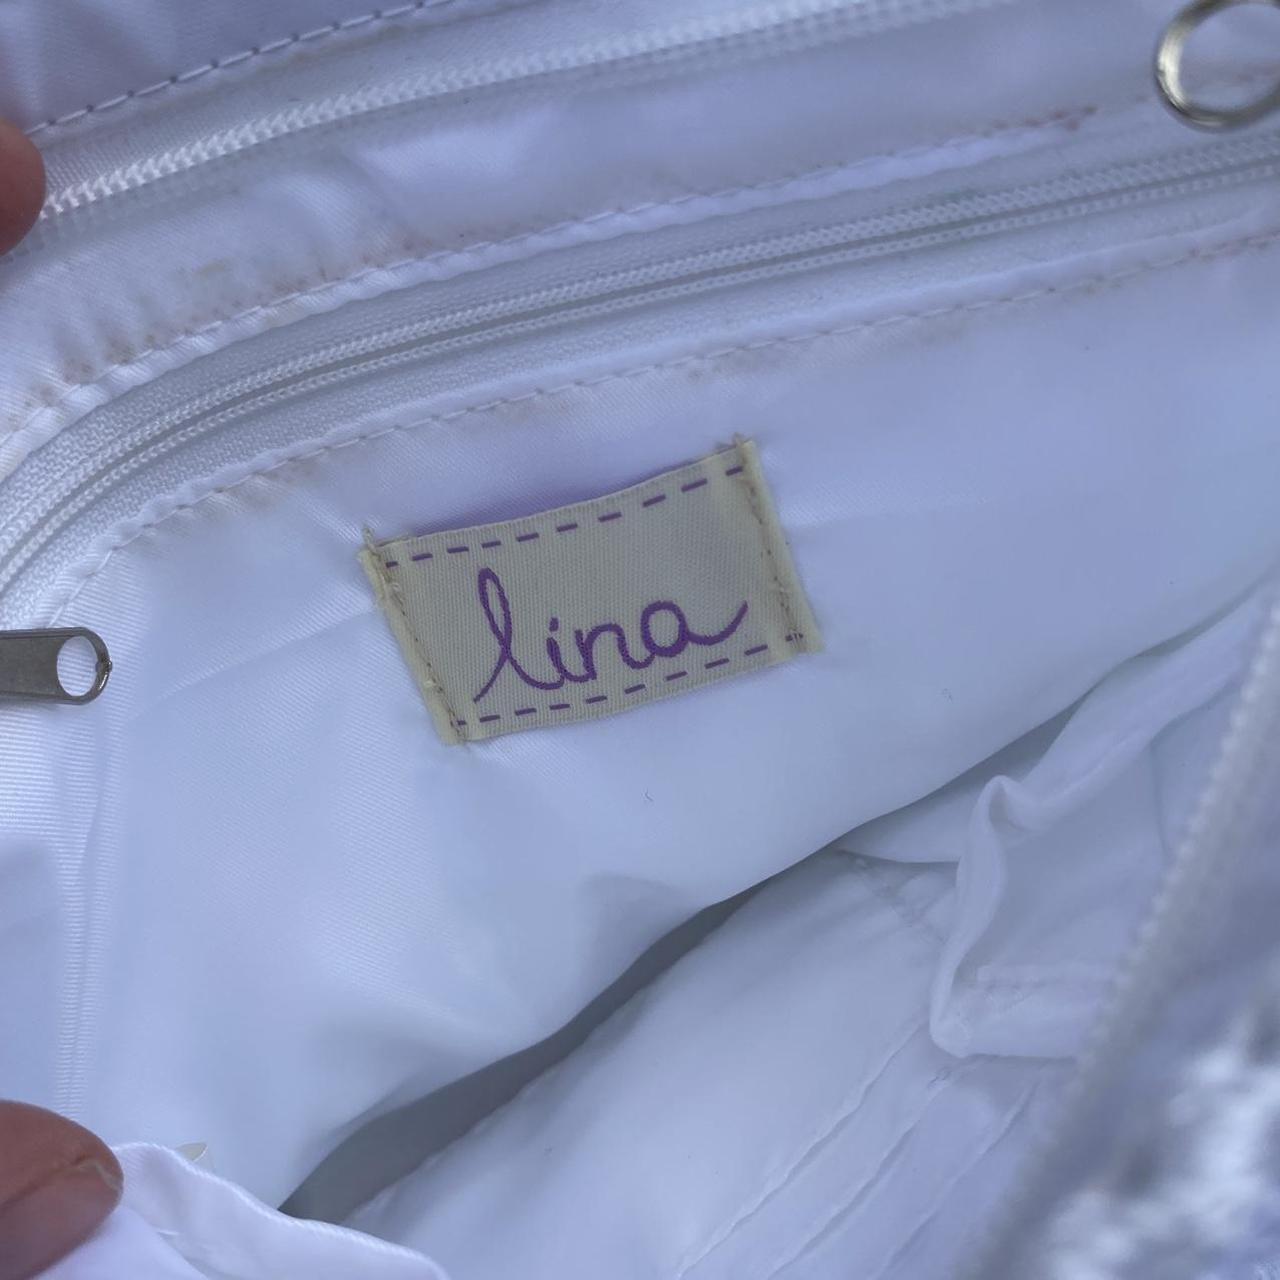 Product Image 2 - White woven handbag

Brand: Lina

Era: 2000s

Style/aesthetic: